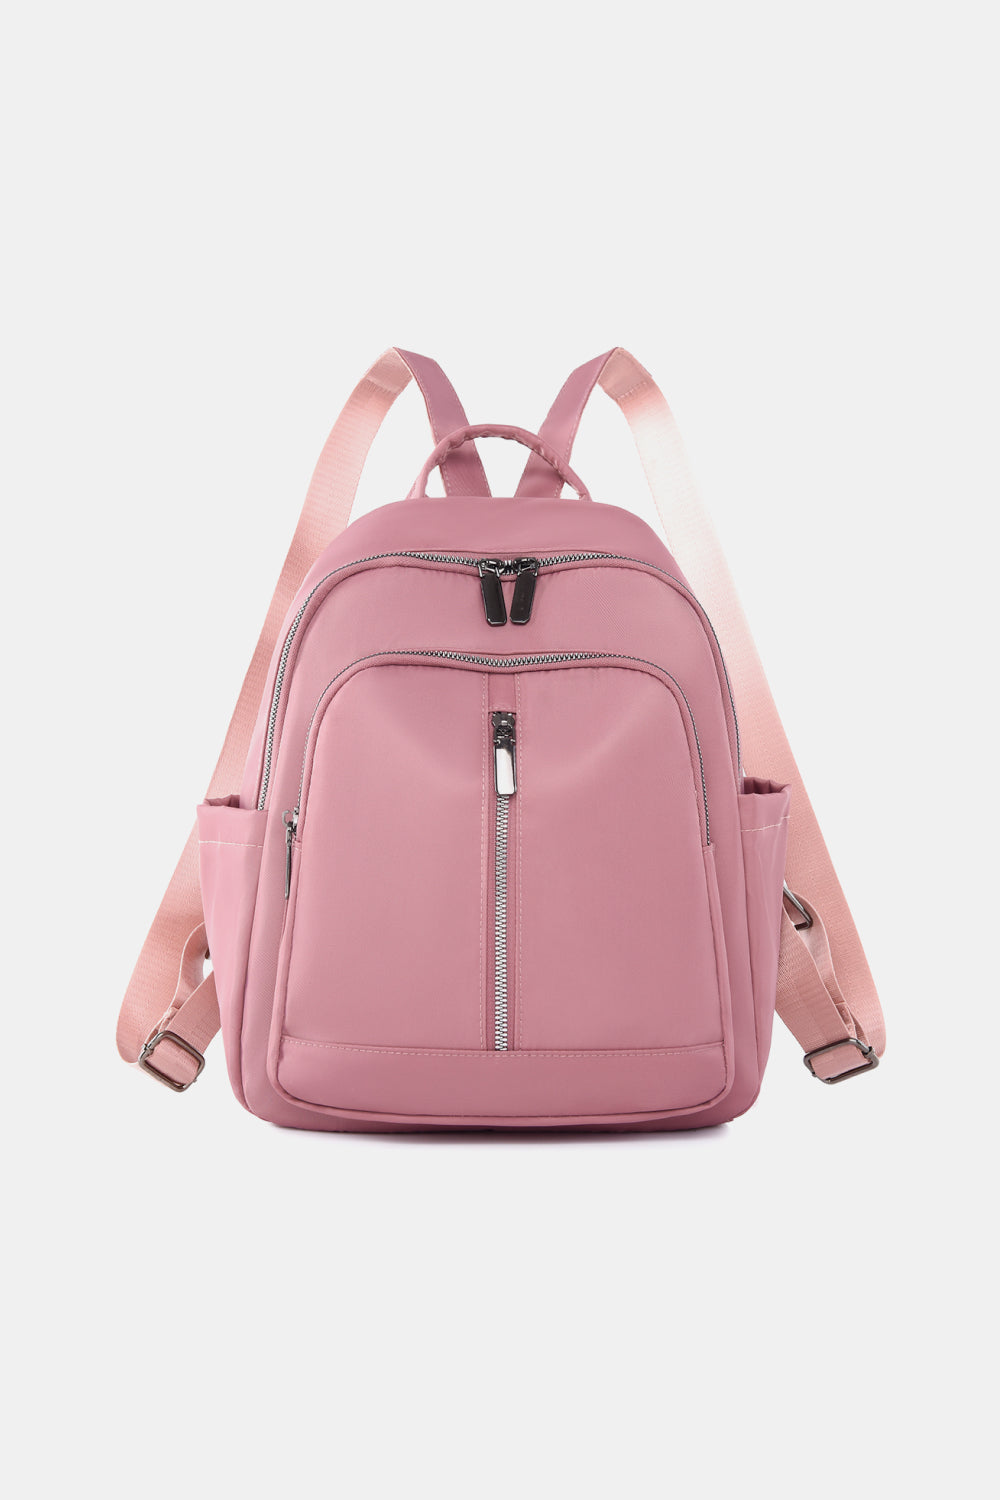 Corduroy Backpack - Dusty Pink (PRE ORDER 18/3) – Breezy Co.